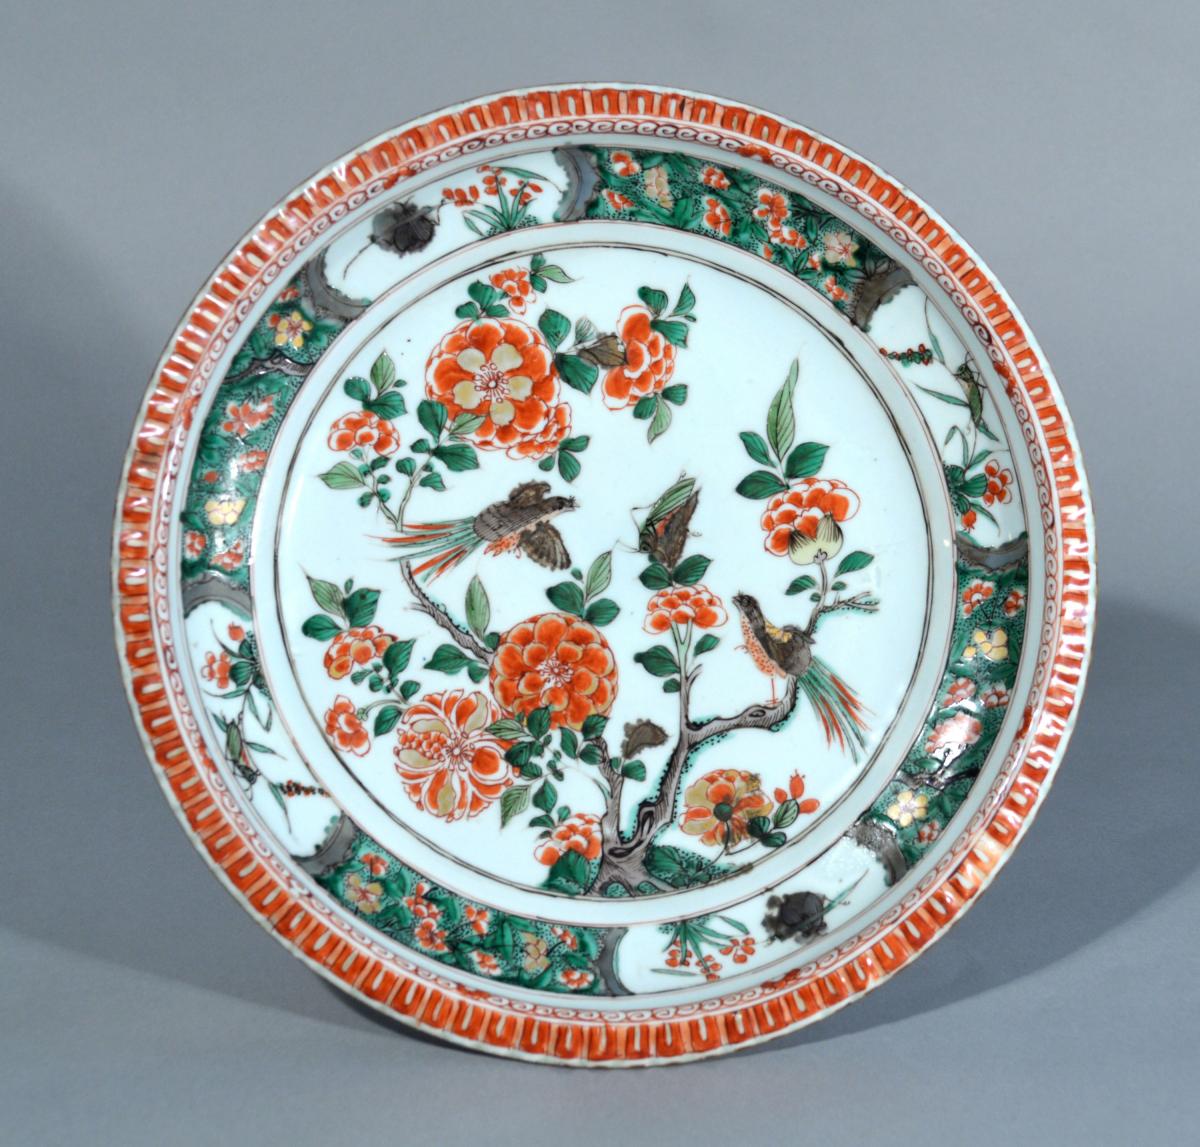 Chinese Export Porcelain Famille Verte Gadrooned Edge Dish, Kangxi Period, Circa 1700-20.